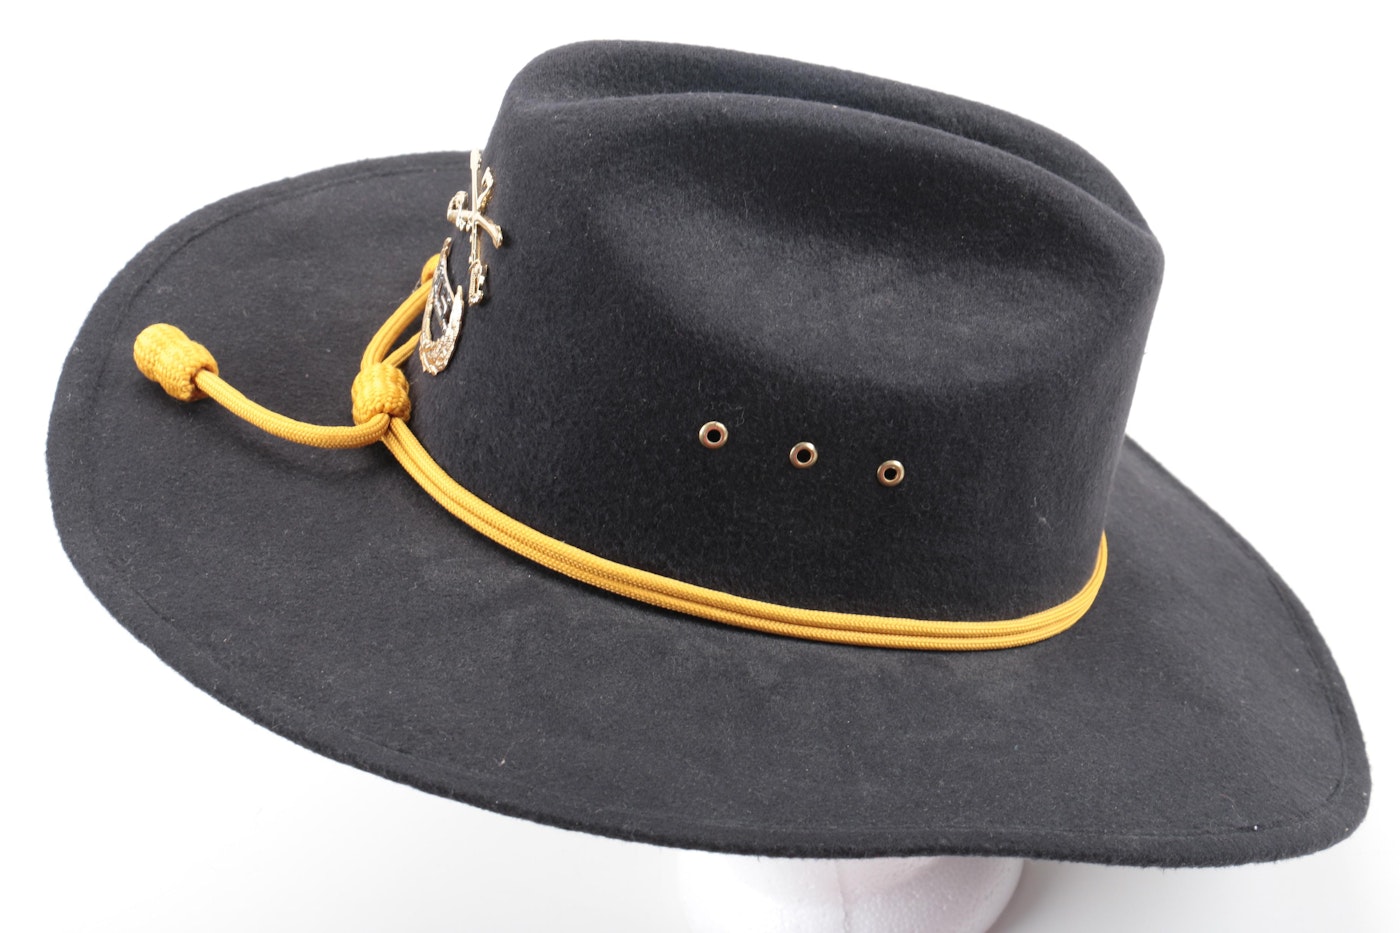 Replica Civil War Union Cavalry Hat | EBTH